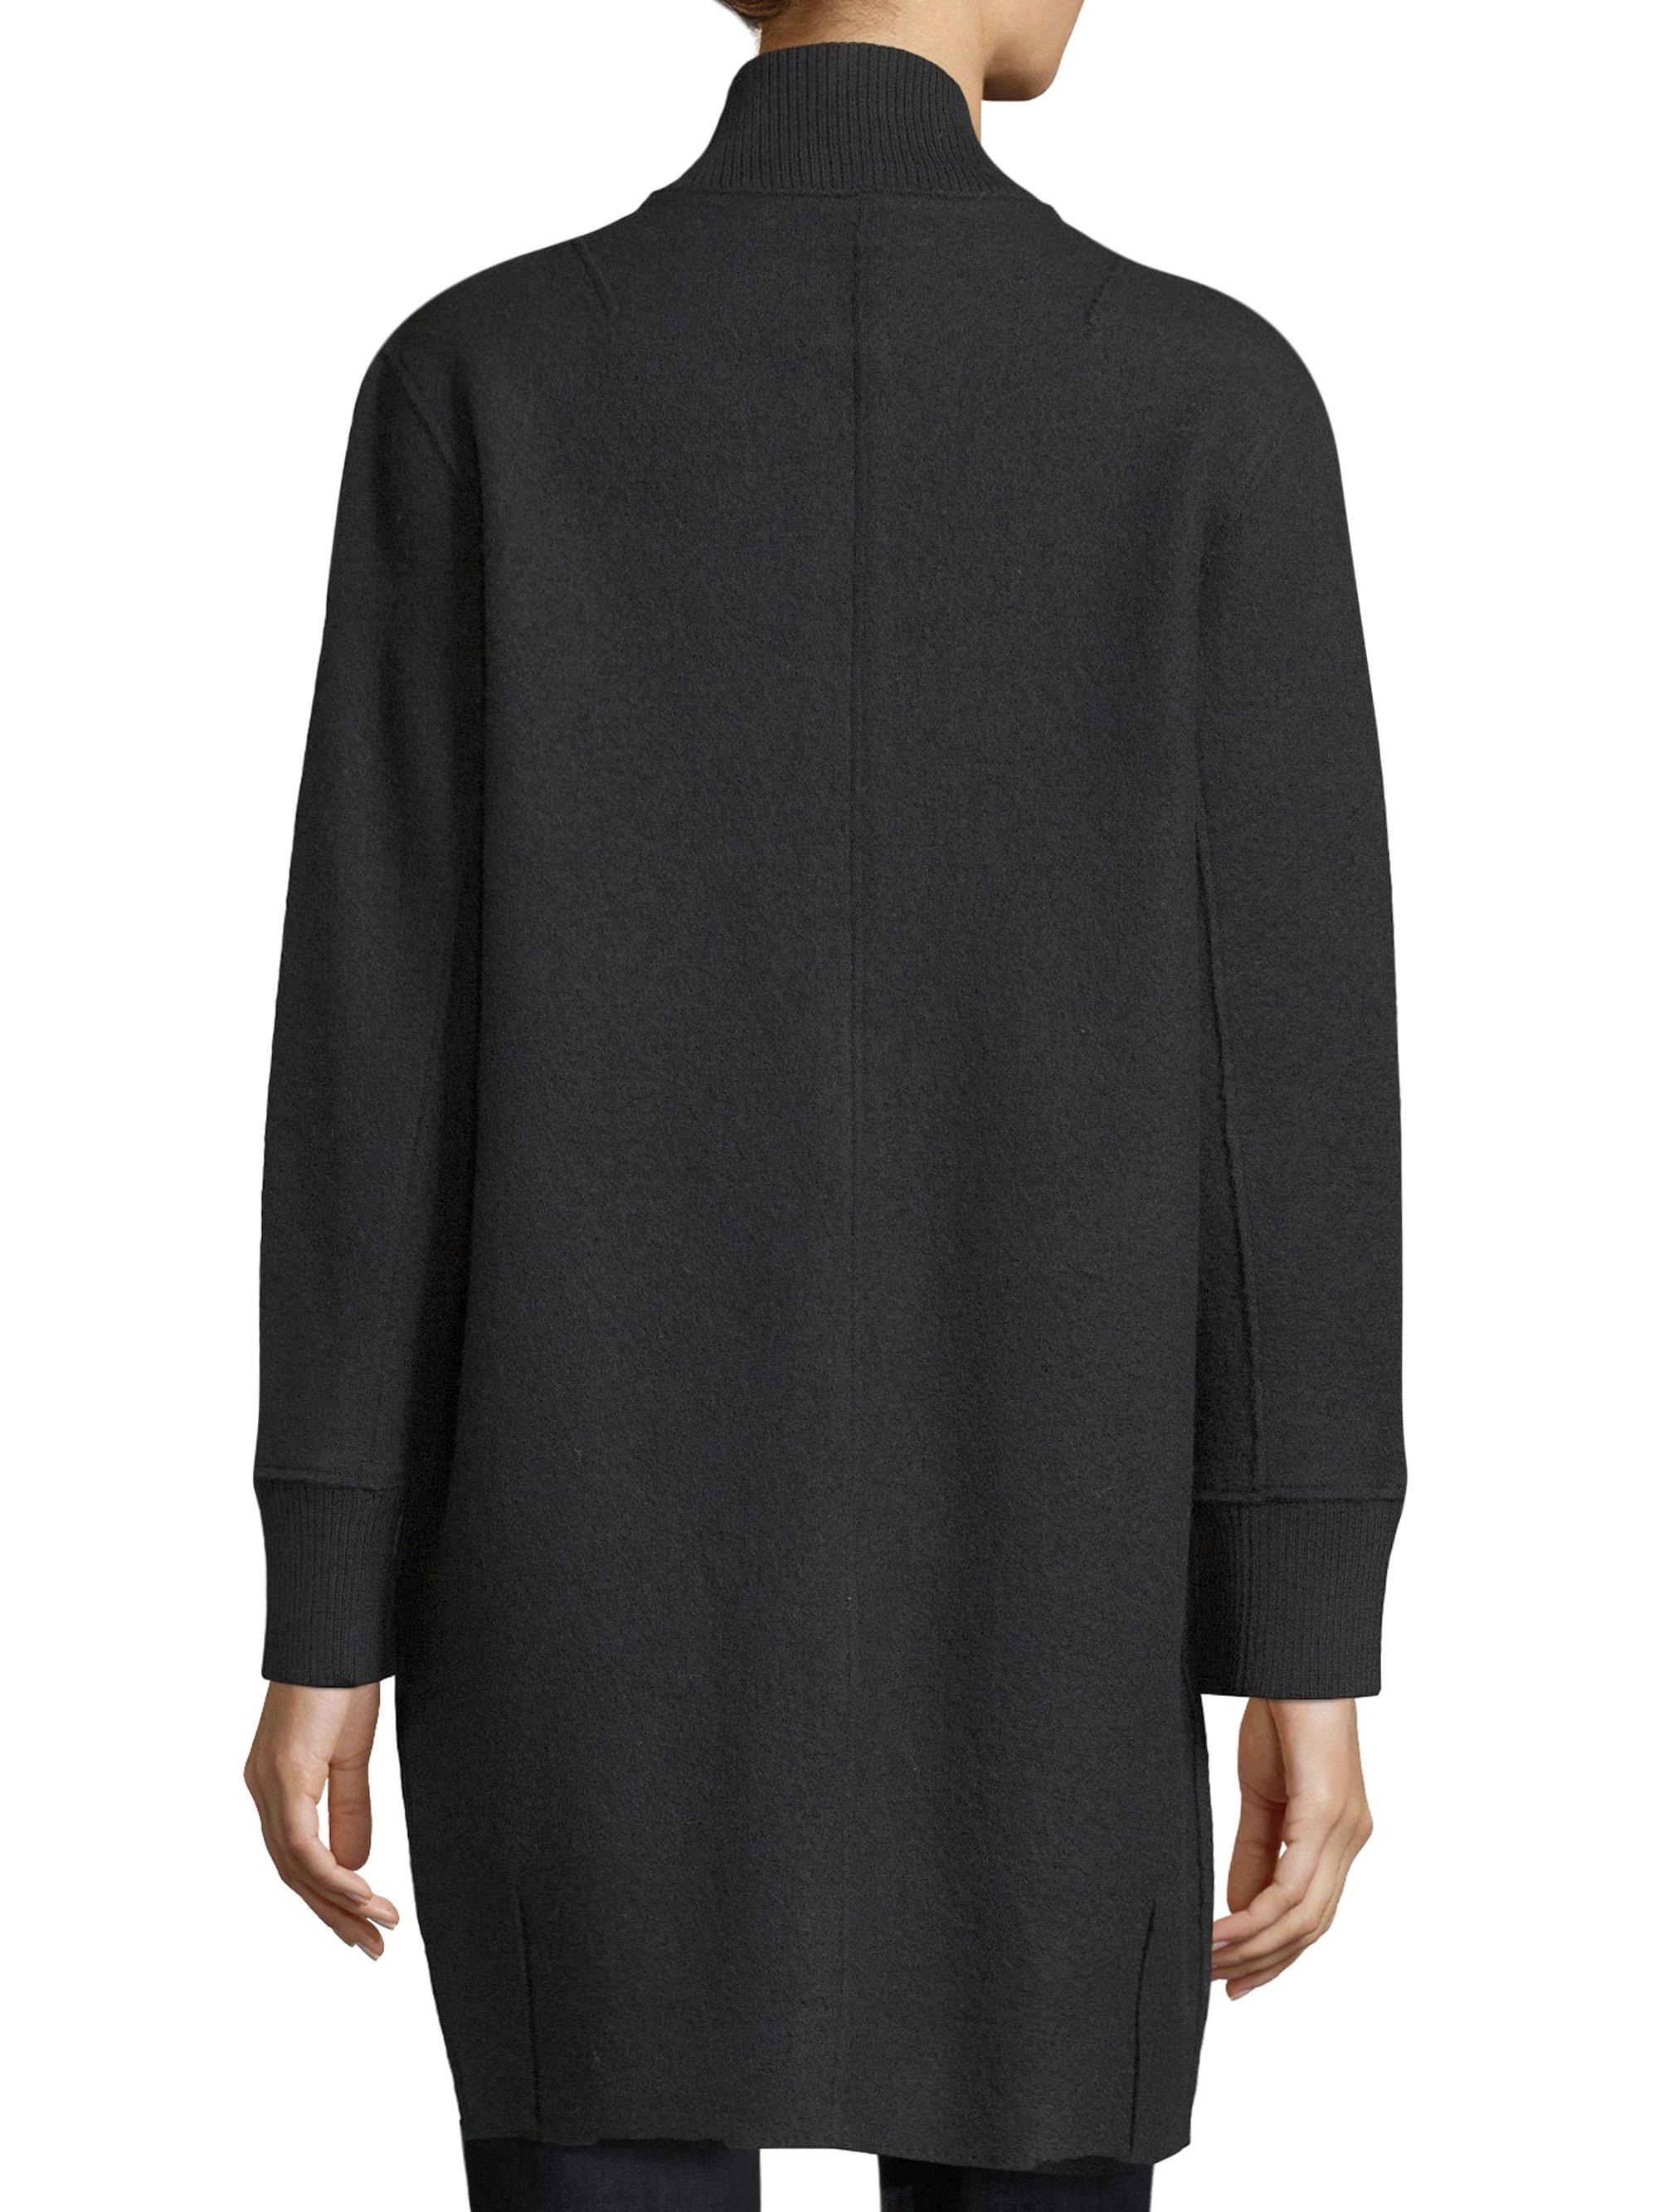 Lyst - Eileen Fisher Stand Collar Wool Jacket in Black